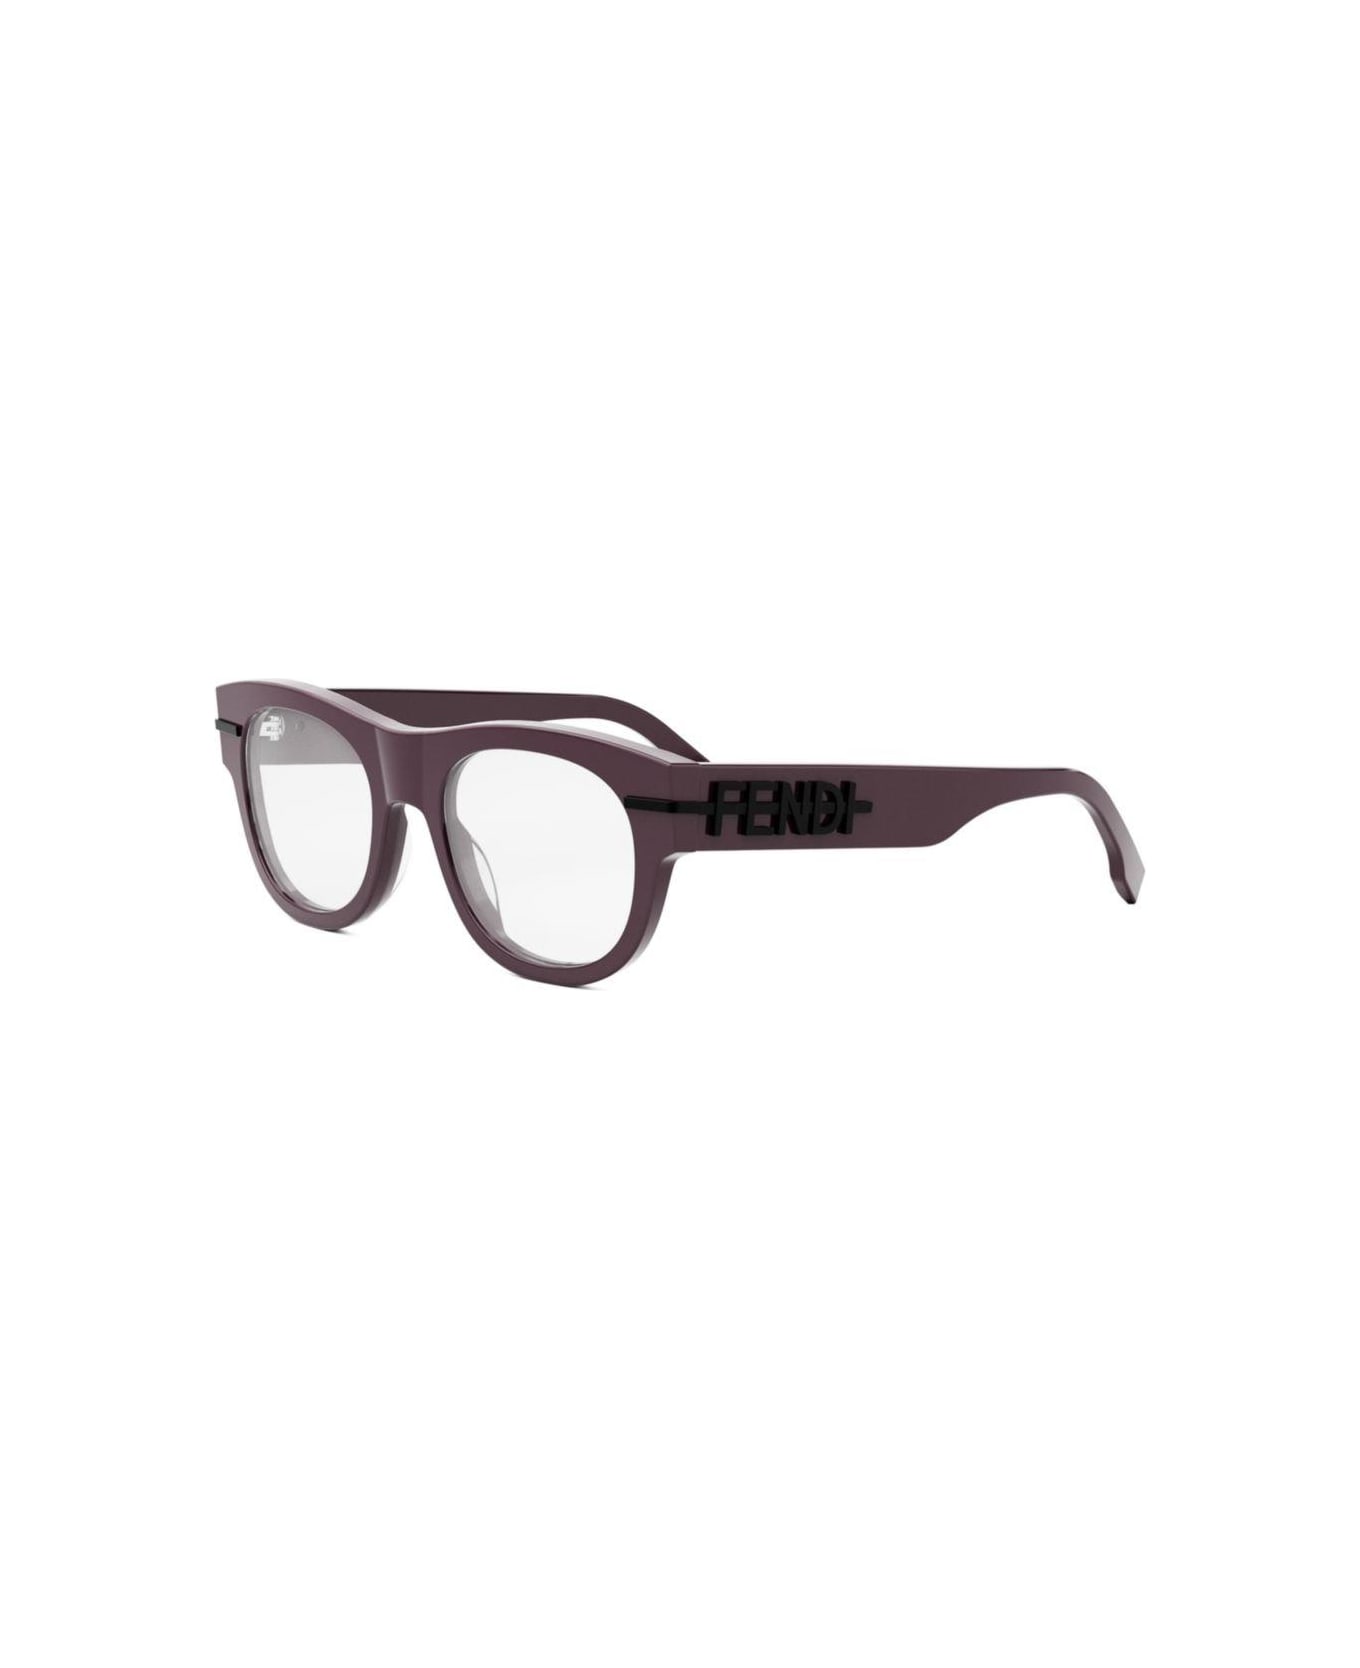 Fendi Eyewear Round-frame Glasses - 069